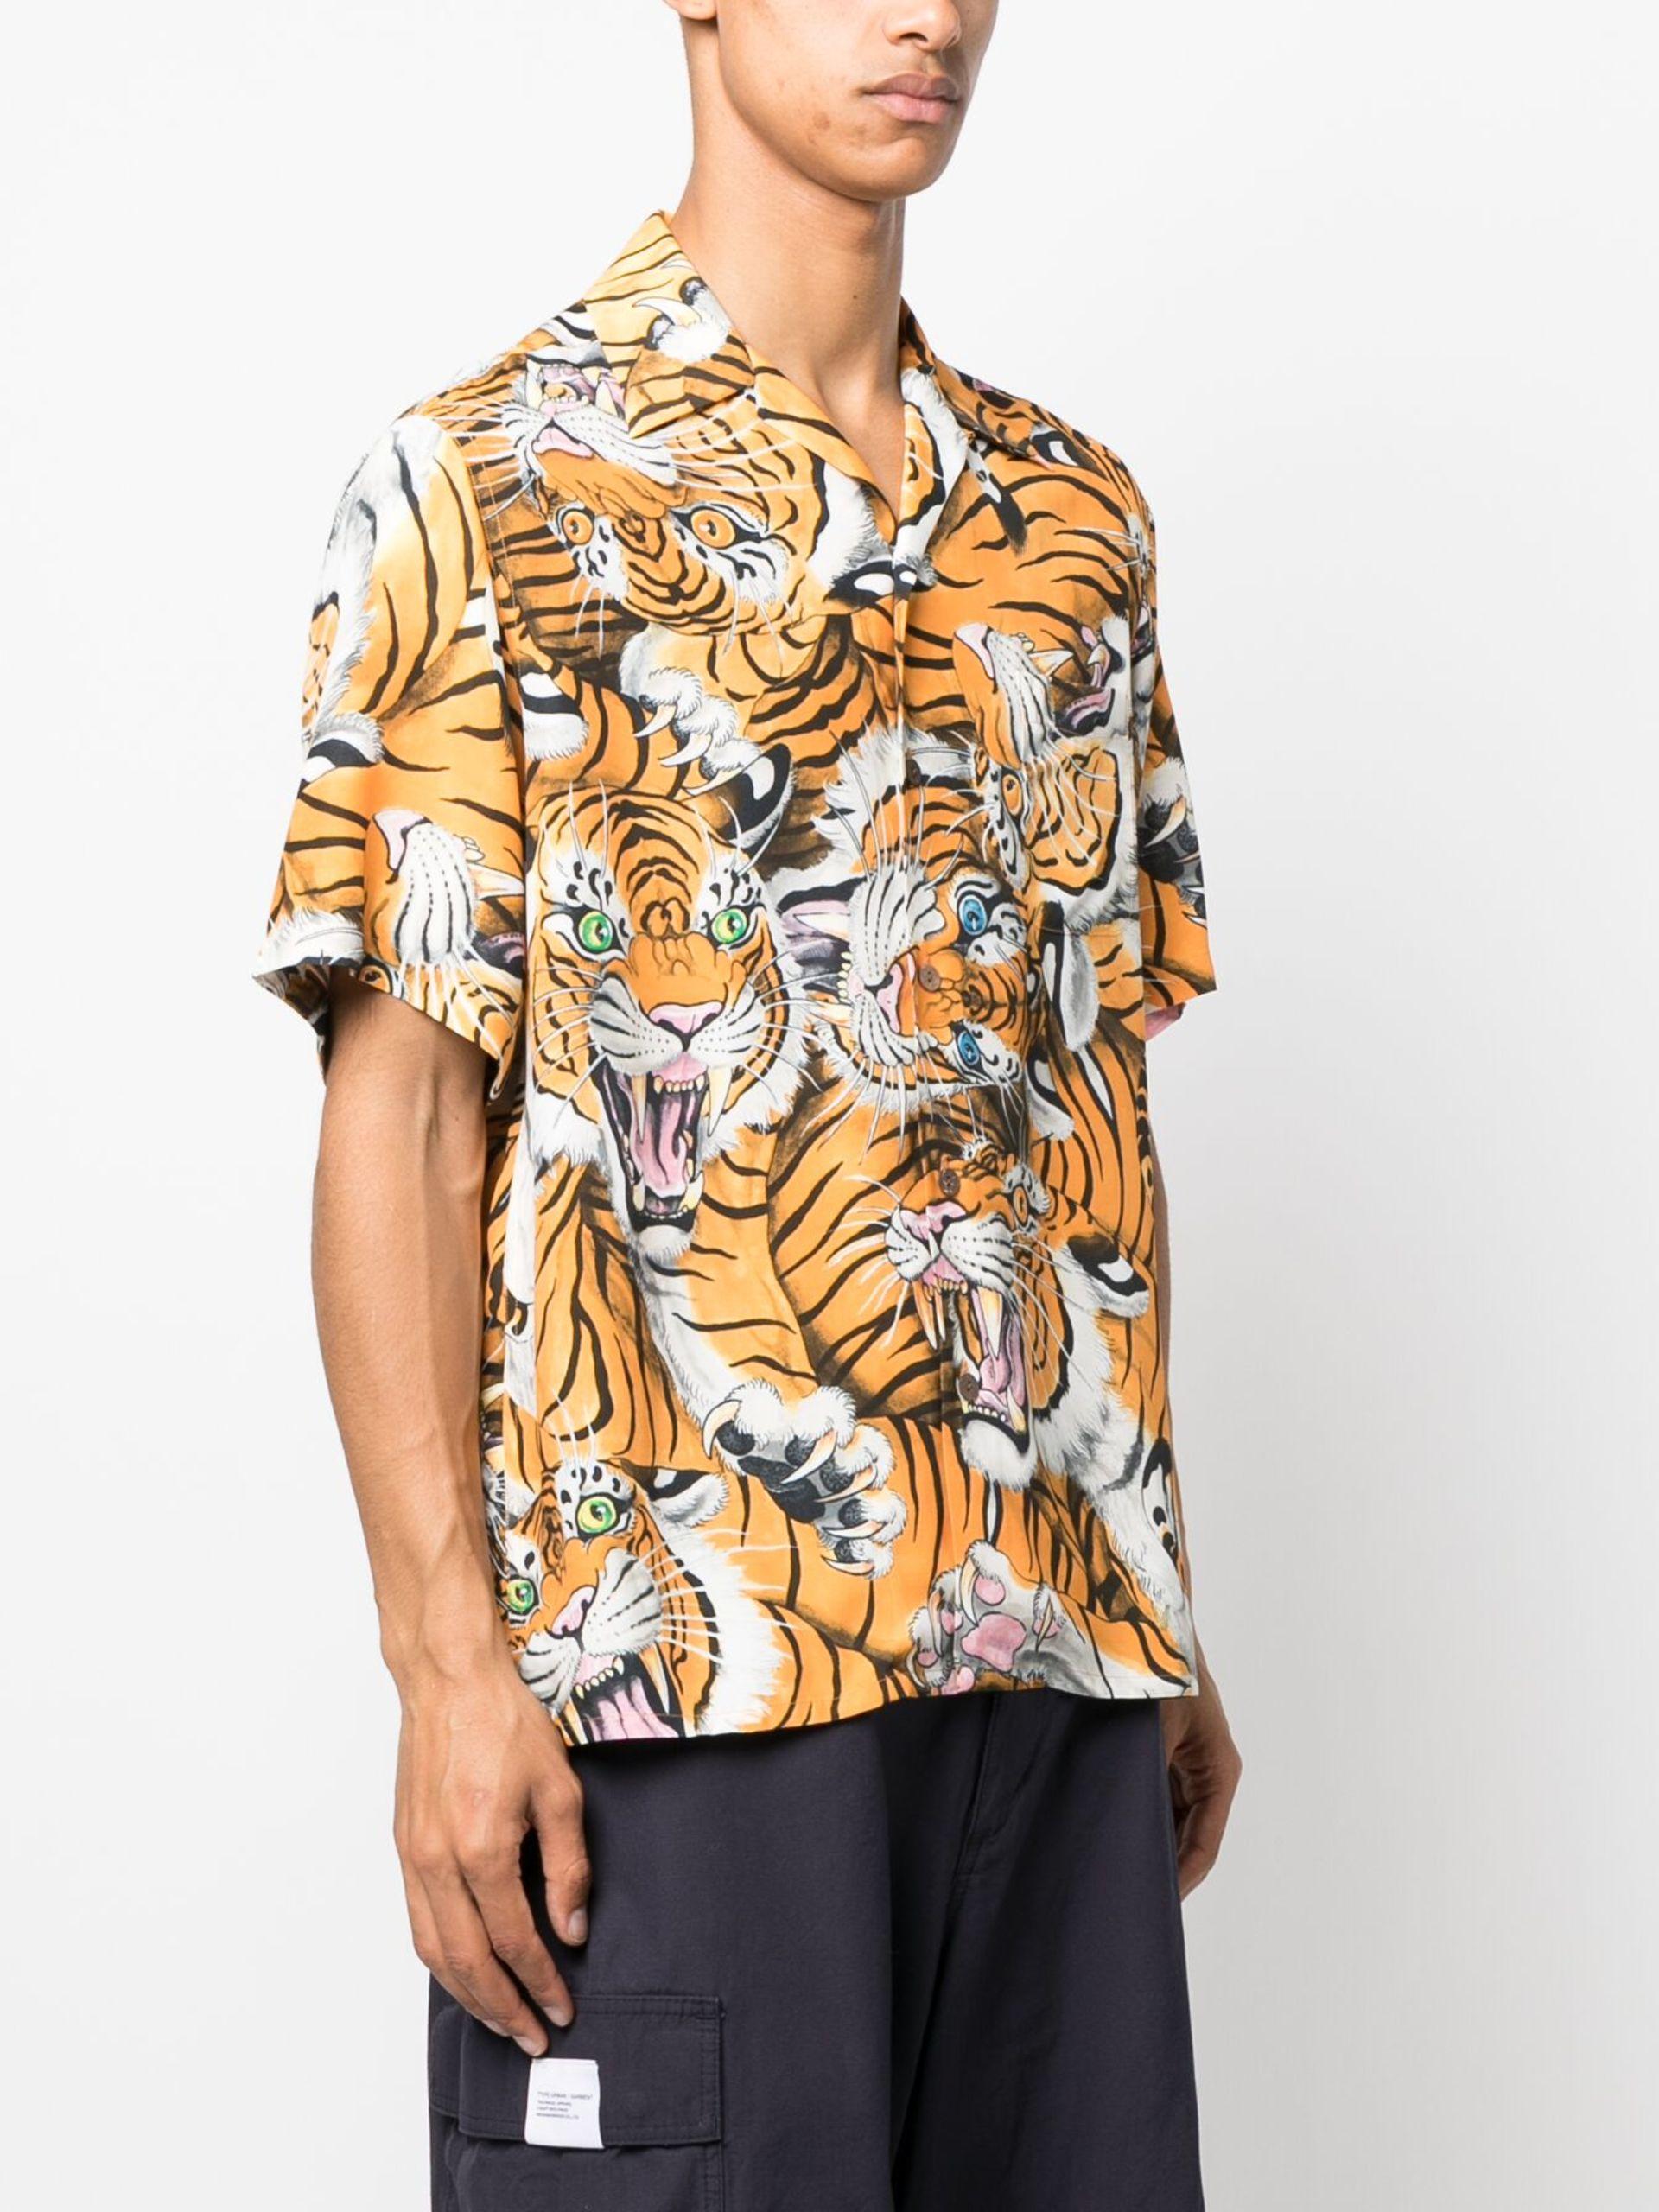 Wacko Maria X Tim Lehi Orange Tiger Print Shirt in Metallic for 